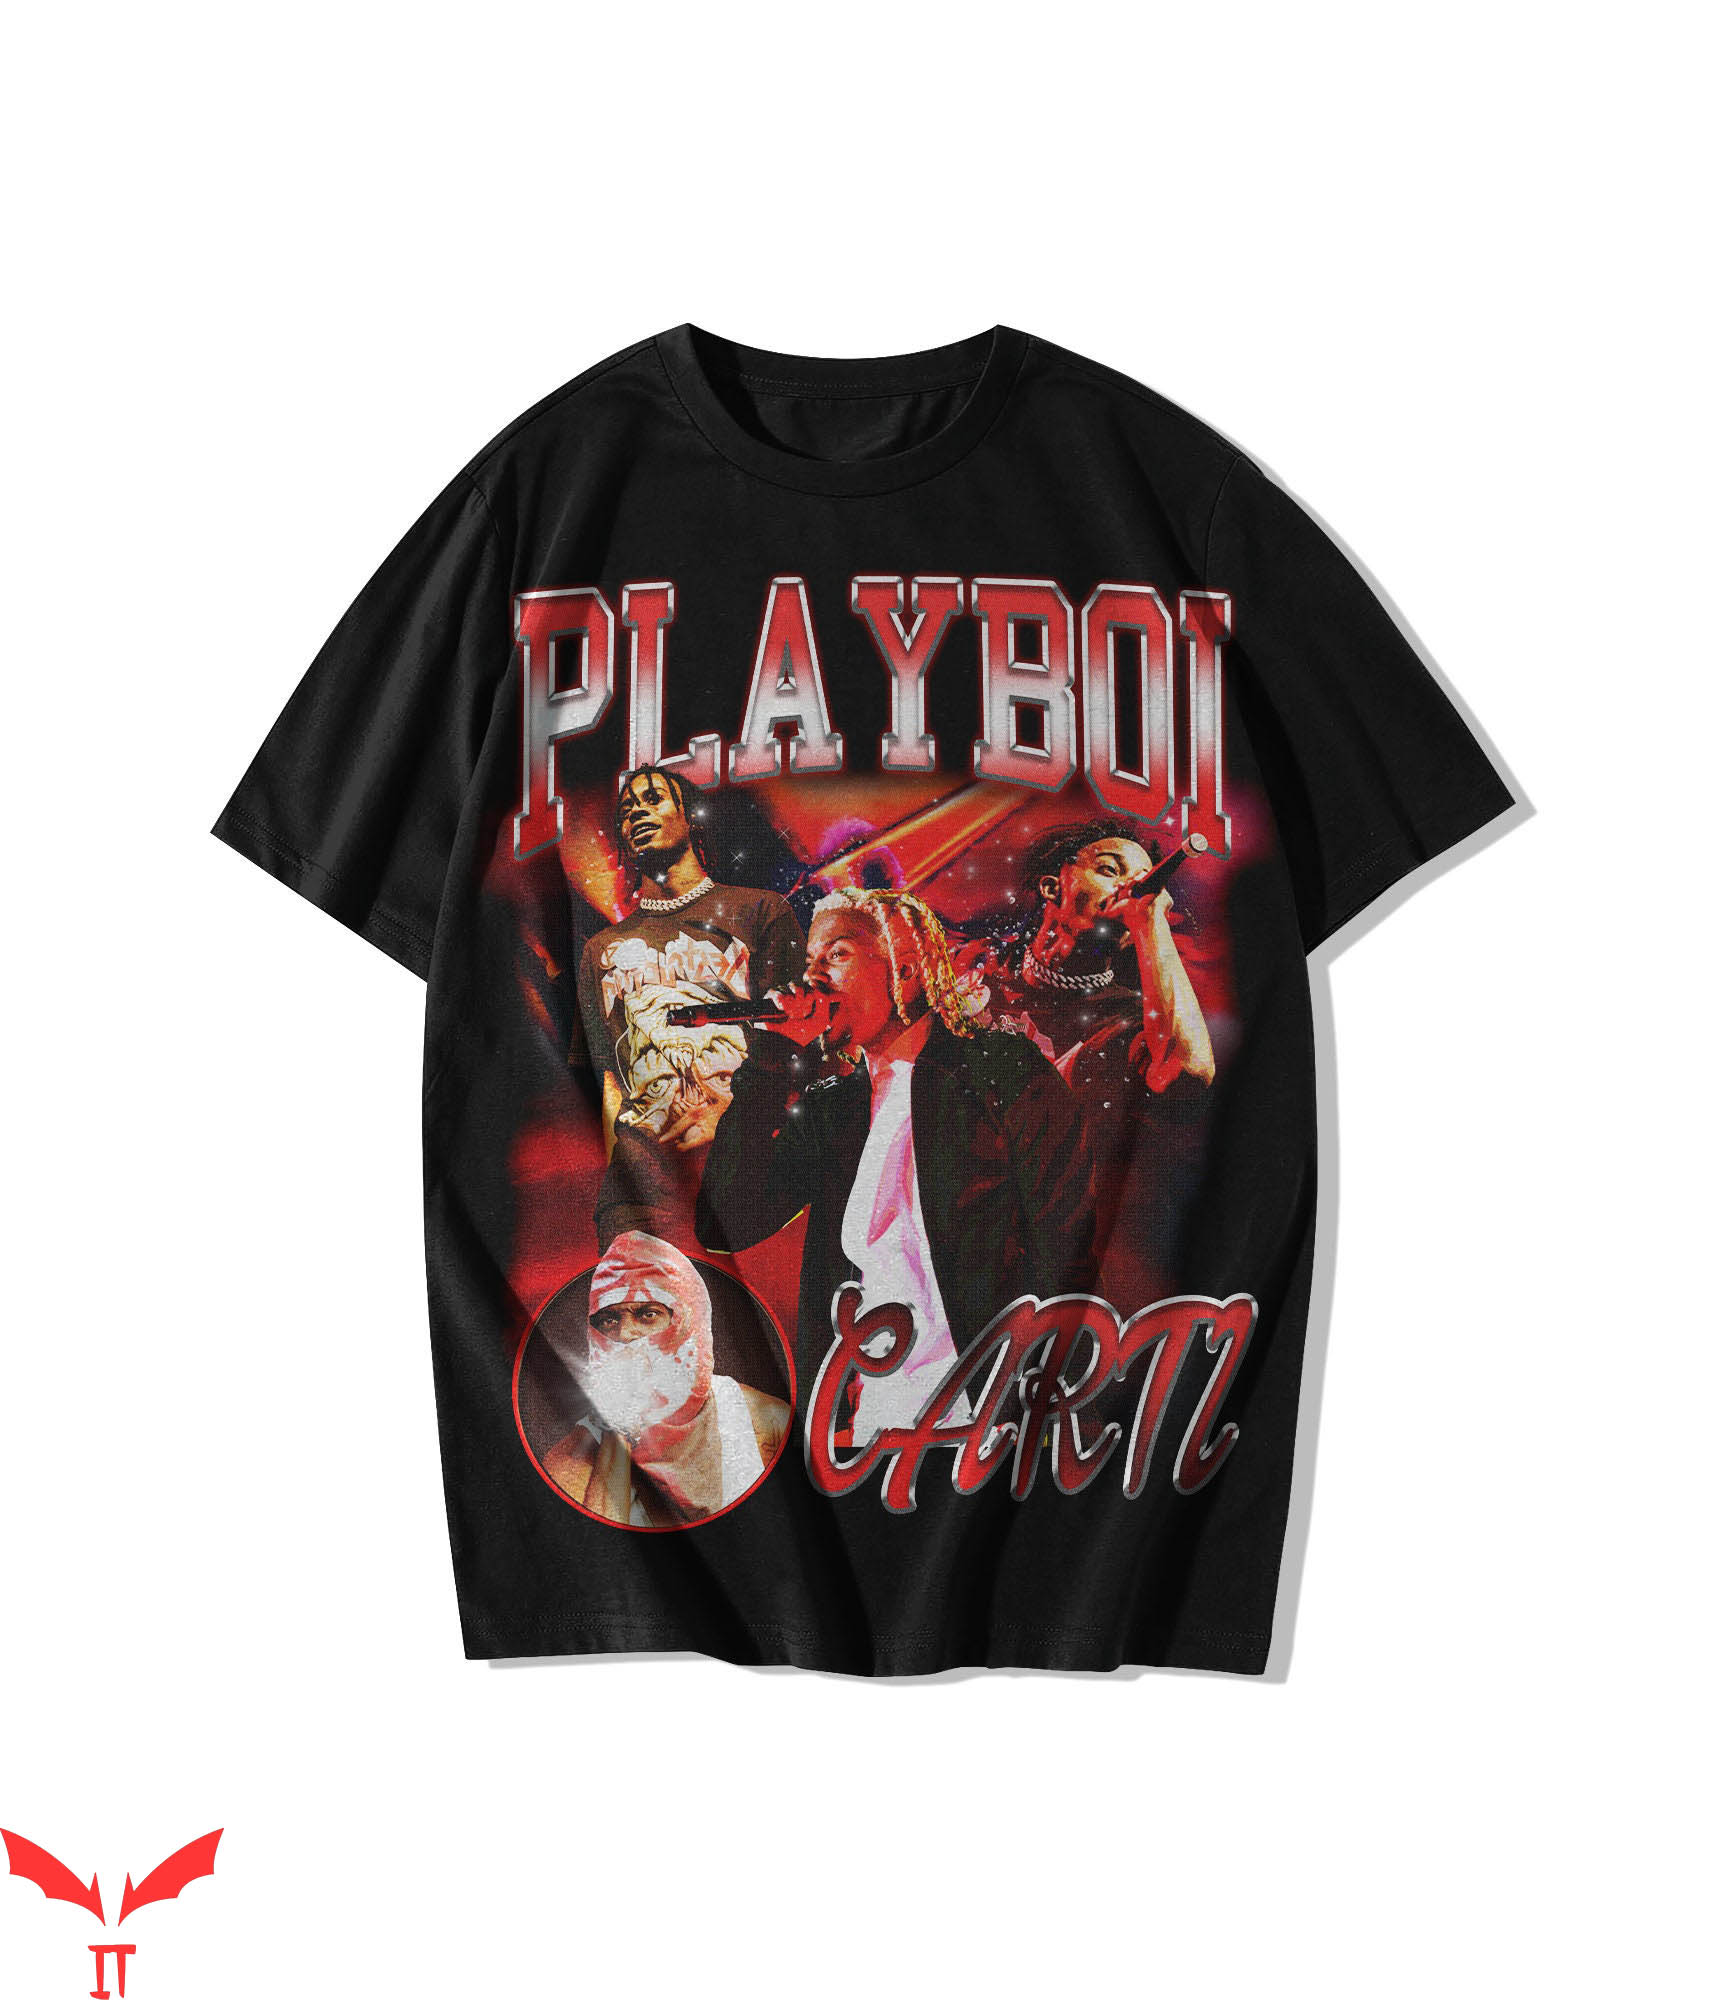 I Love Playboi Carti T-Shirt Vintage Playboi Carti Hip Hop